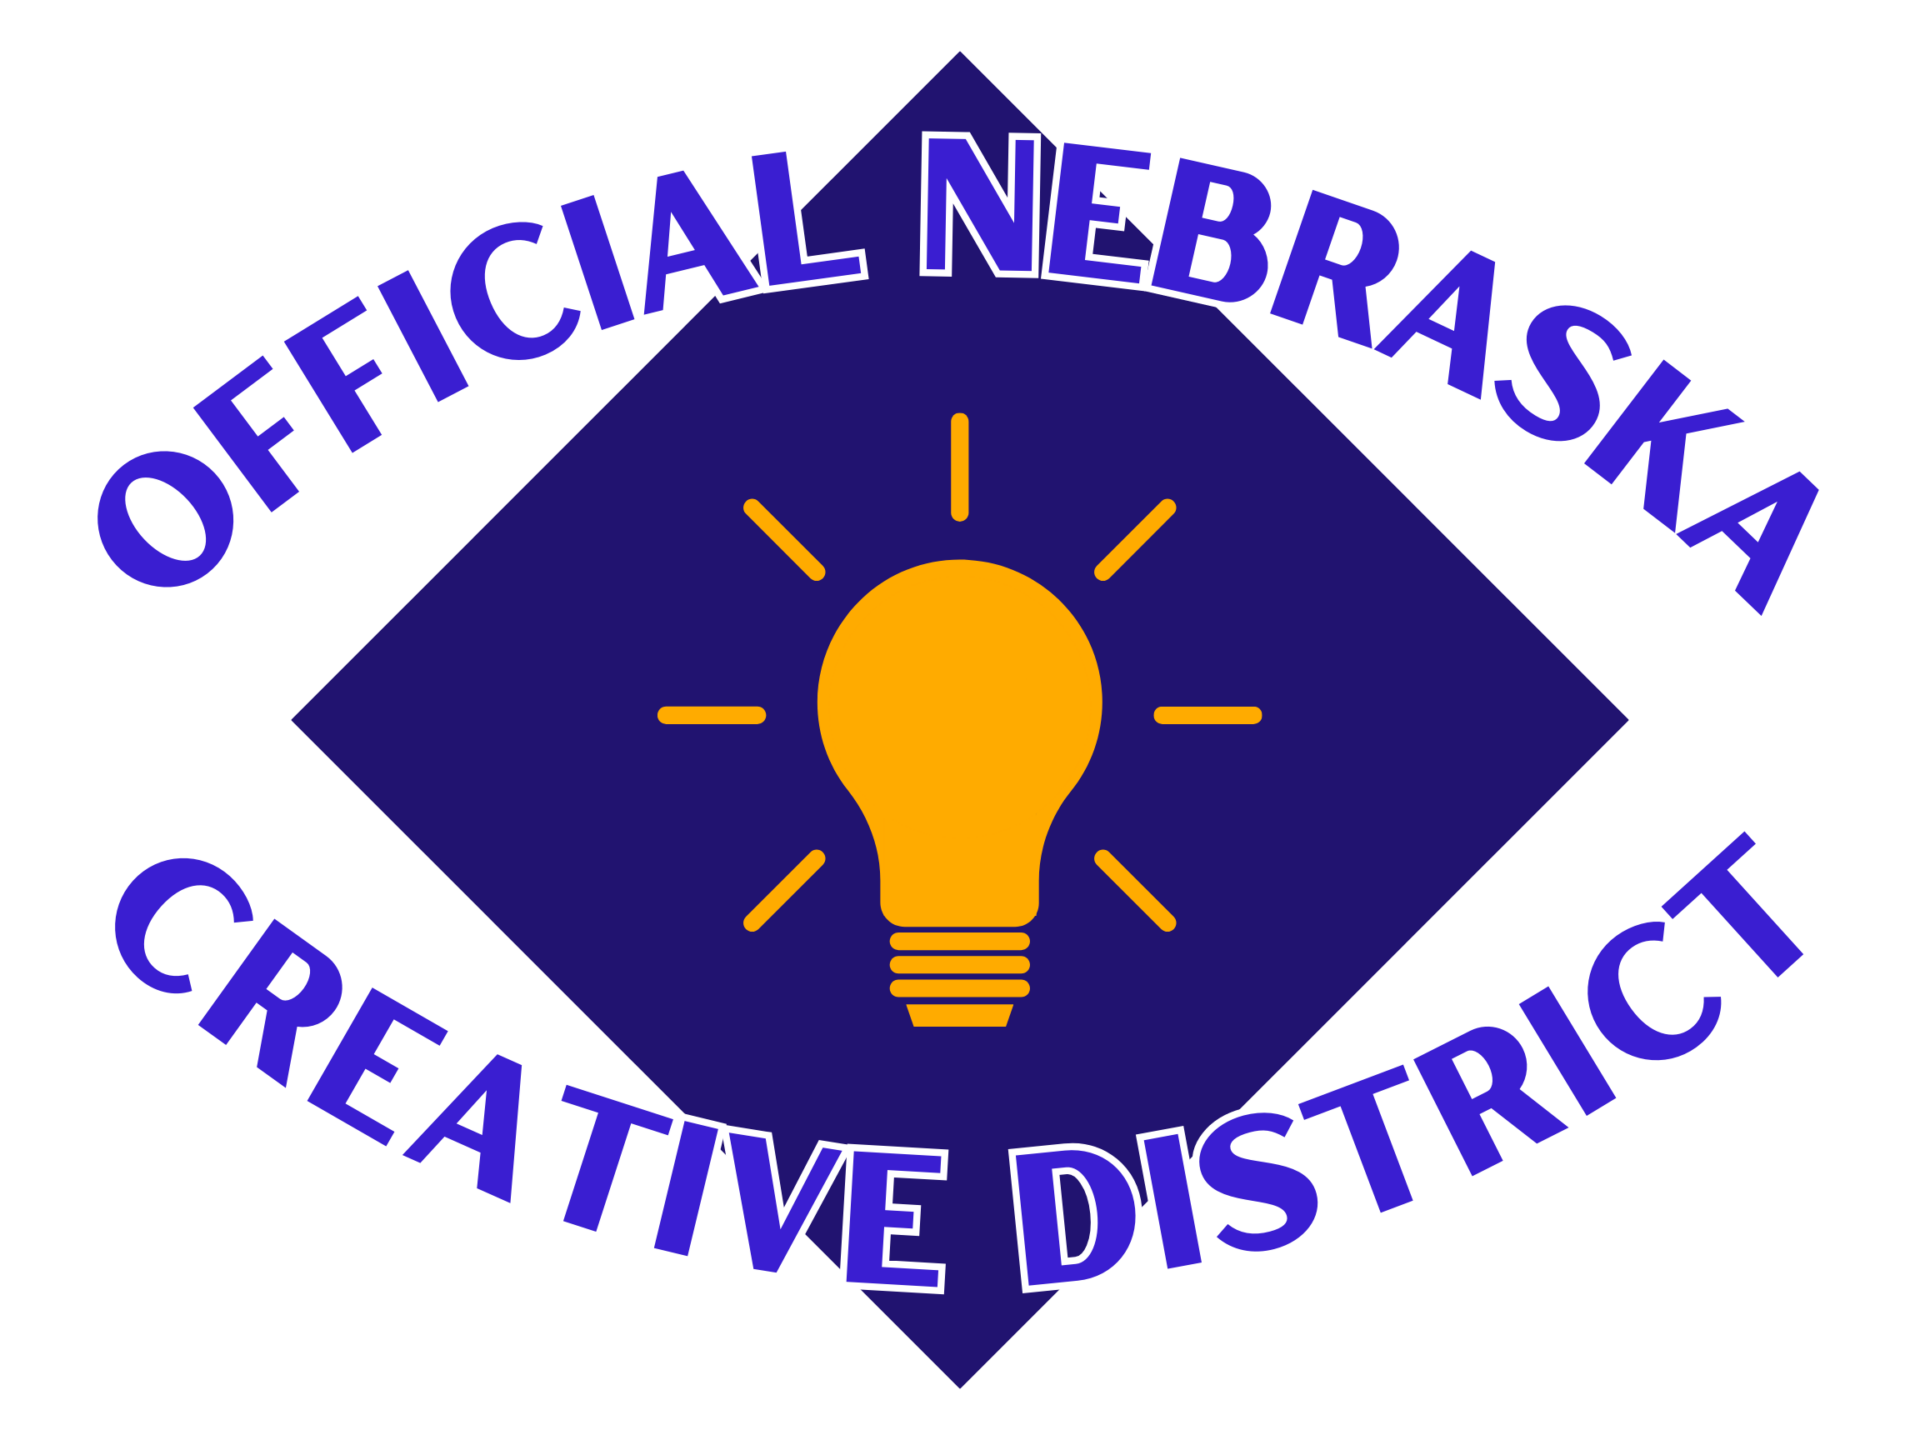 Nebraska Creative Districts Overview - Nebraska Arts Council